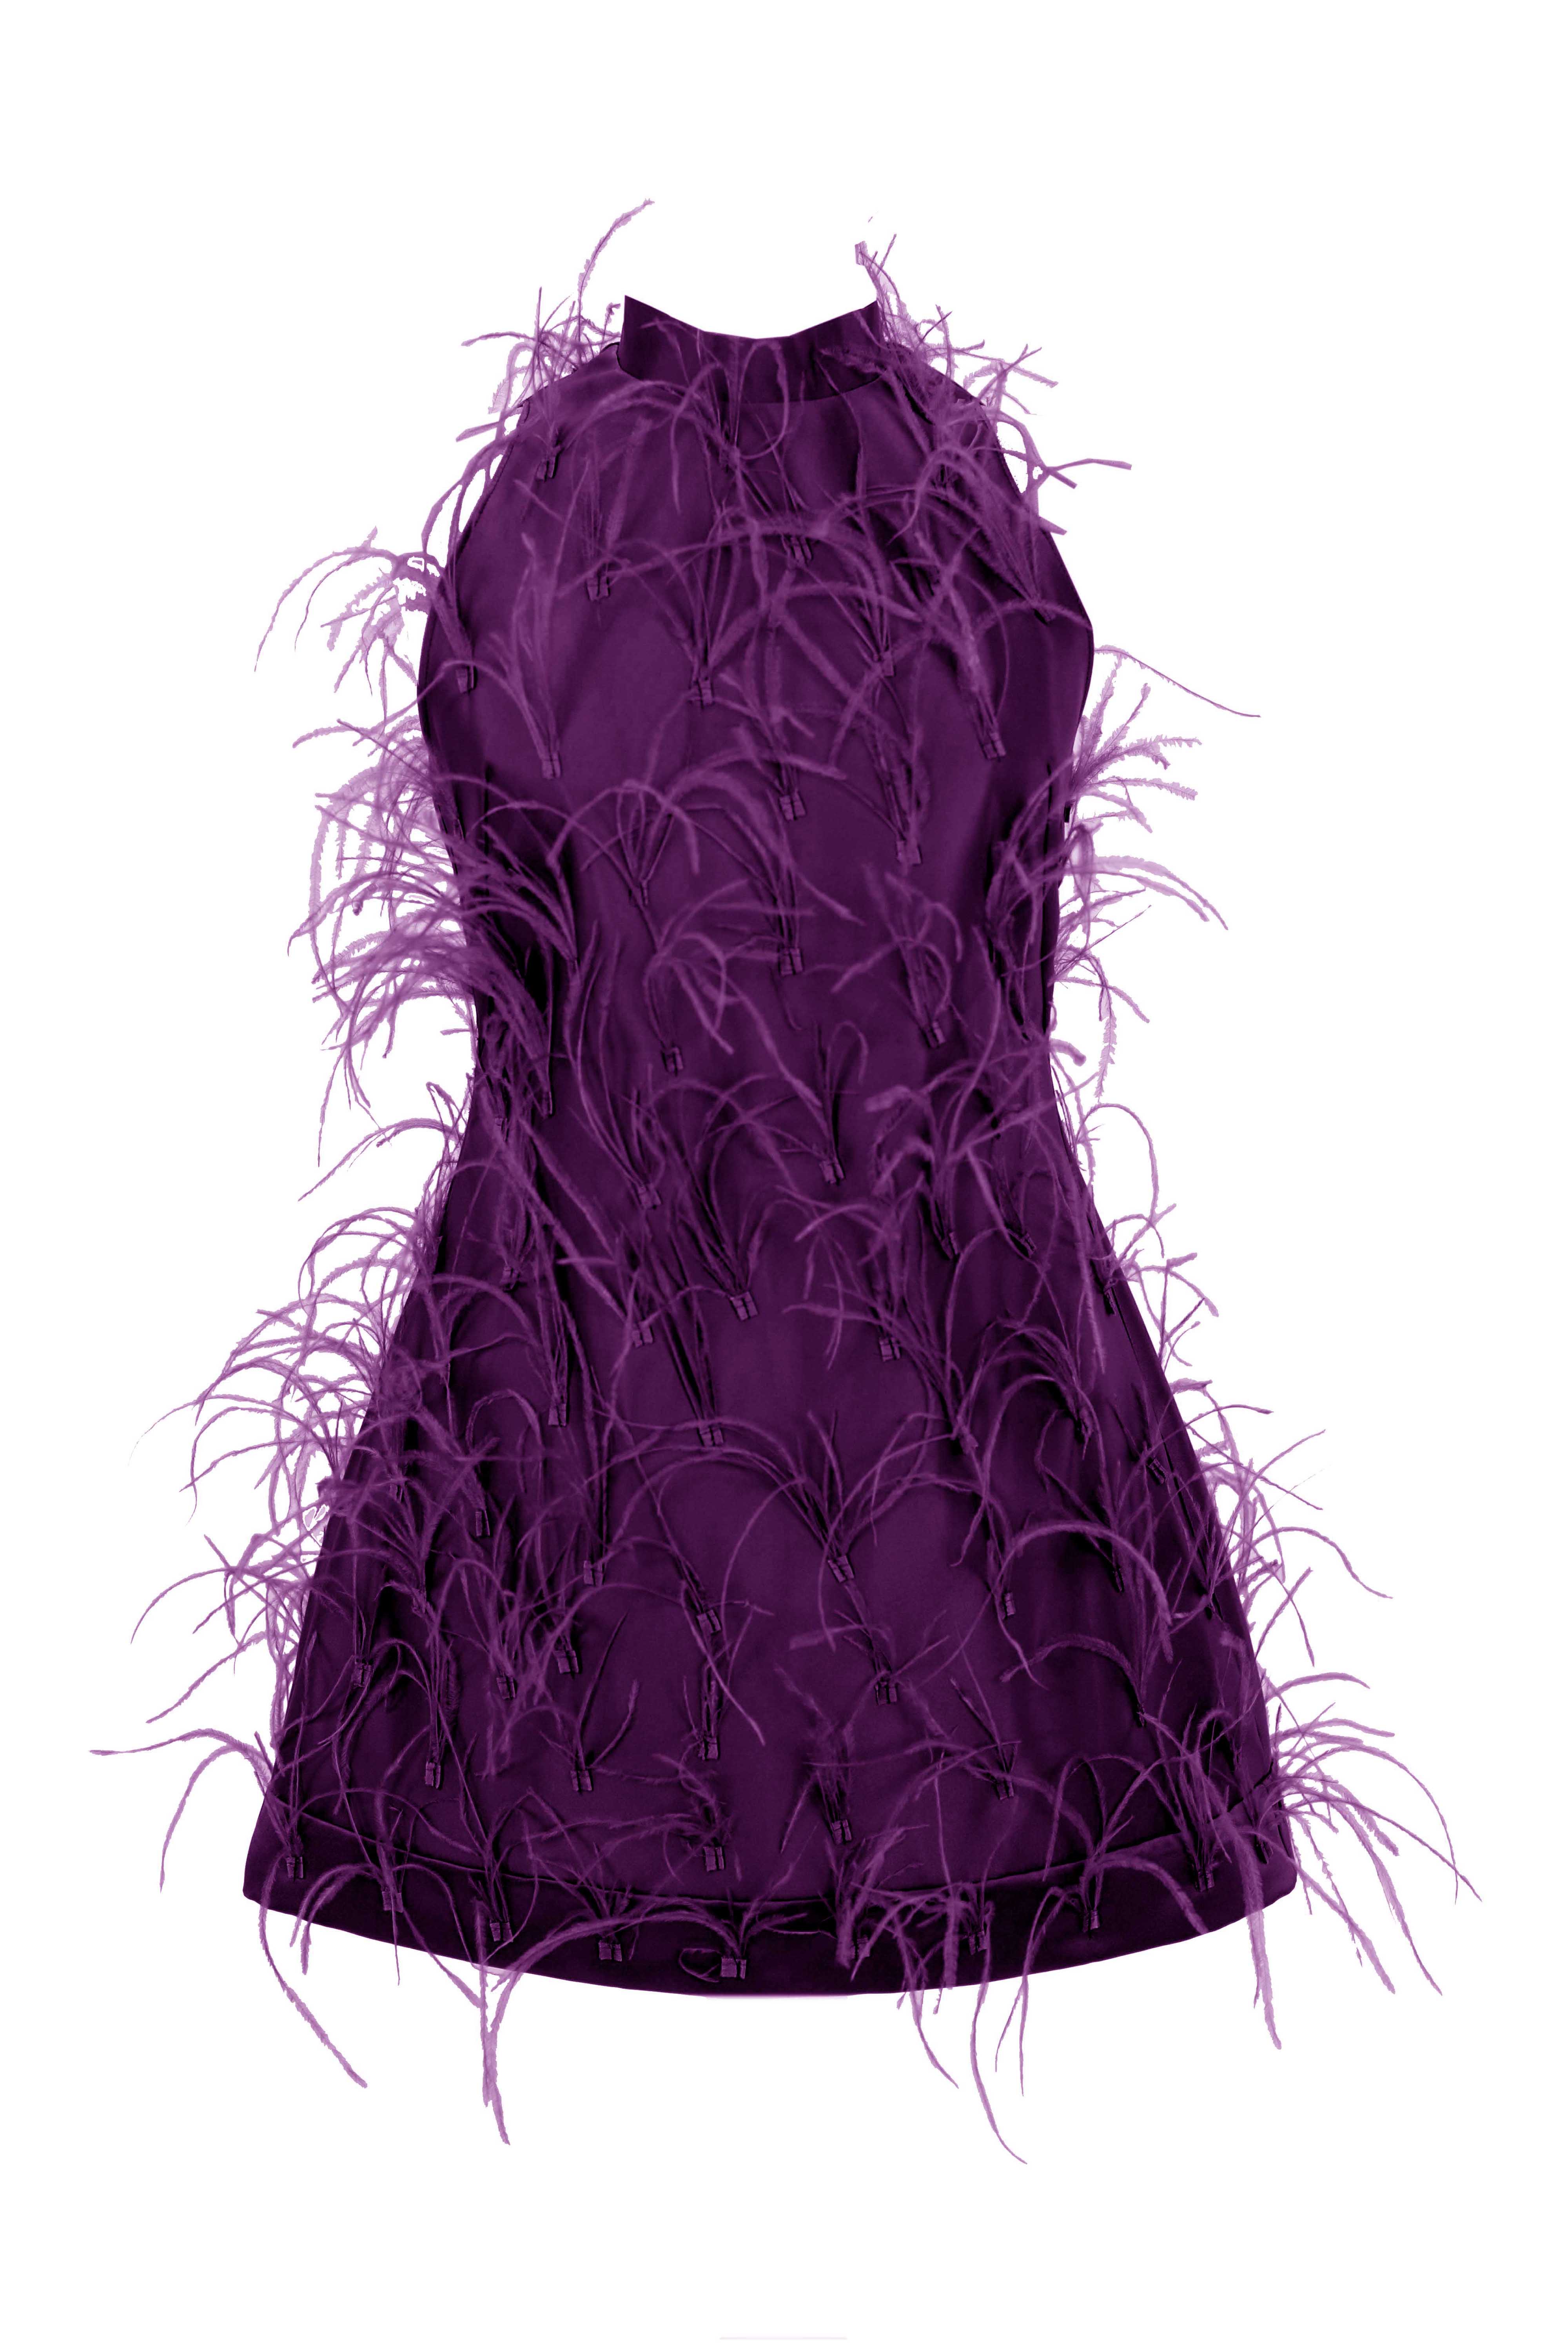 R23101 - AUBERGINE 01 - ALMEEA aubergine purple mini dress with feathers - AMBAR STUDIO